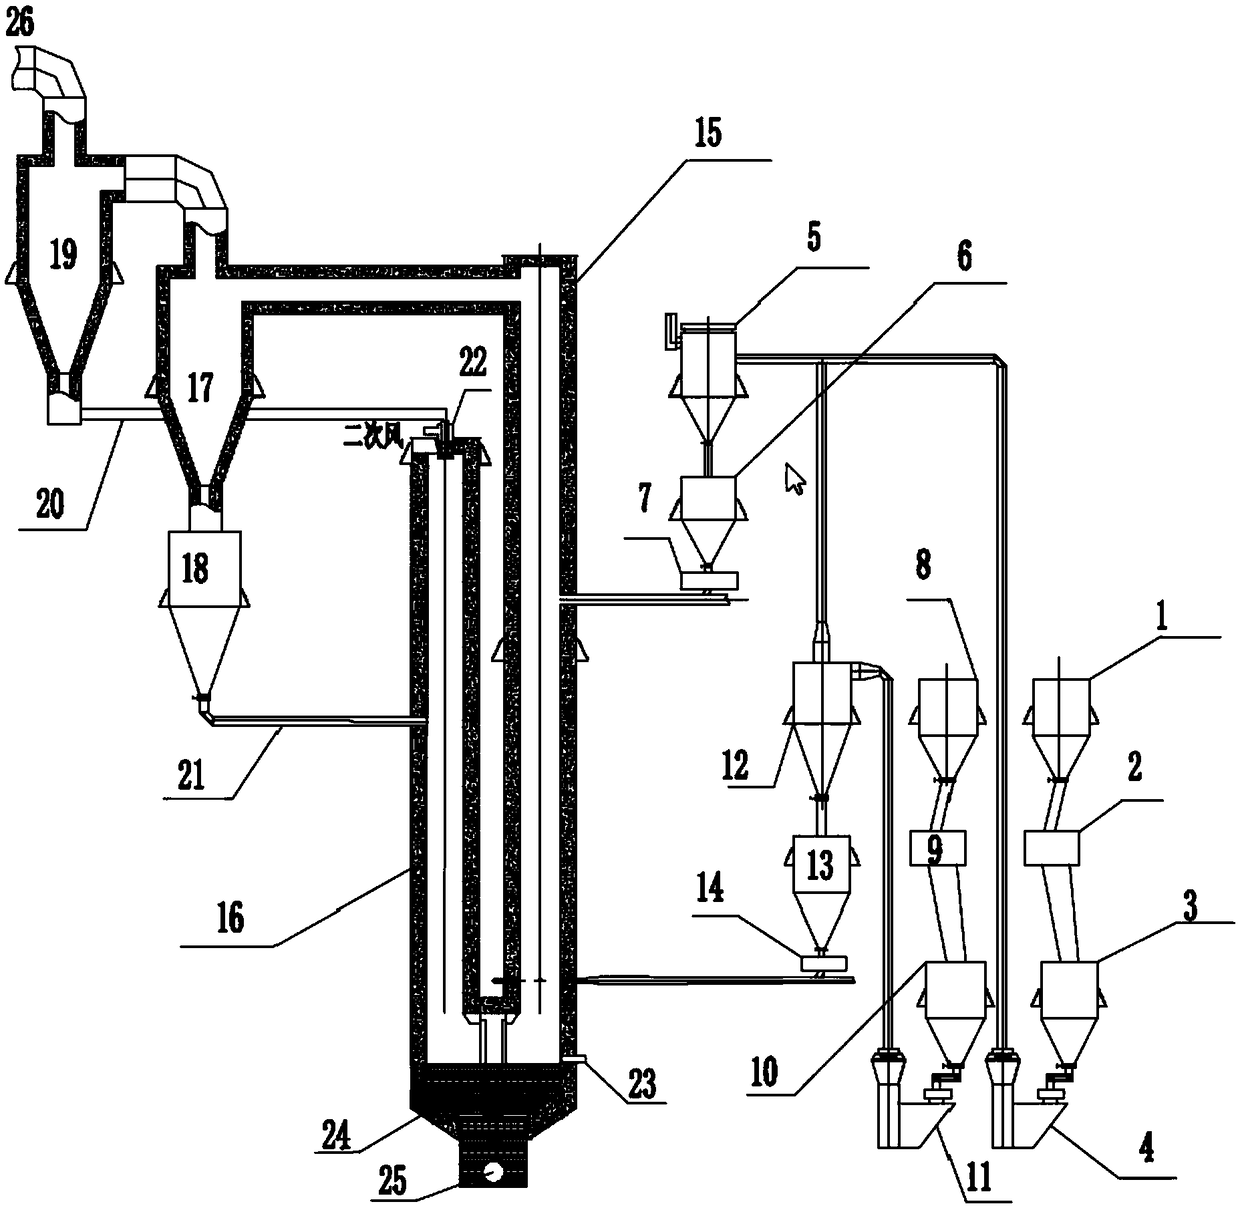 Short-process smelting reduction type iron-making system and method